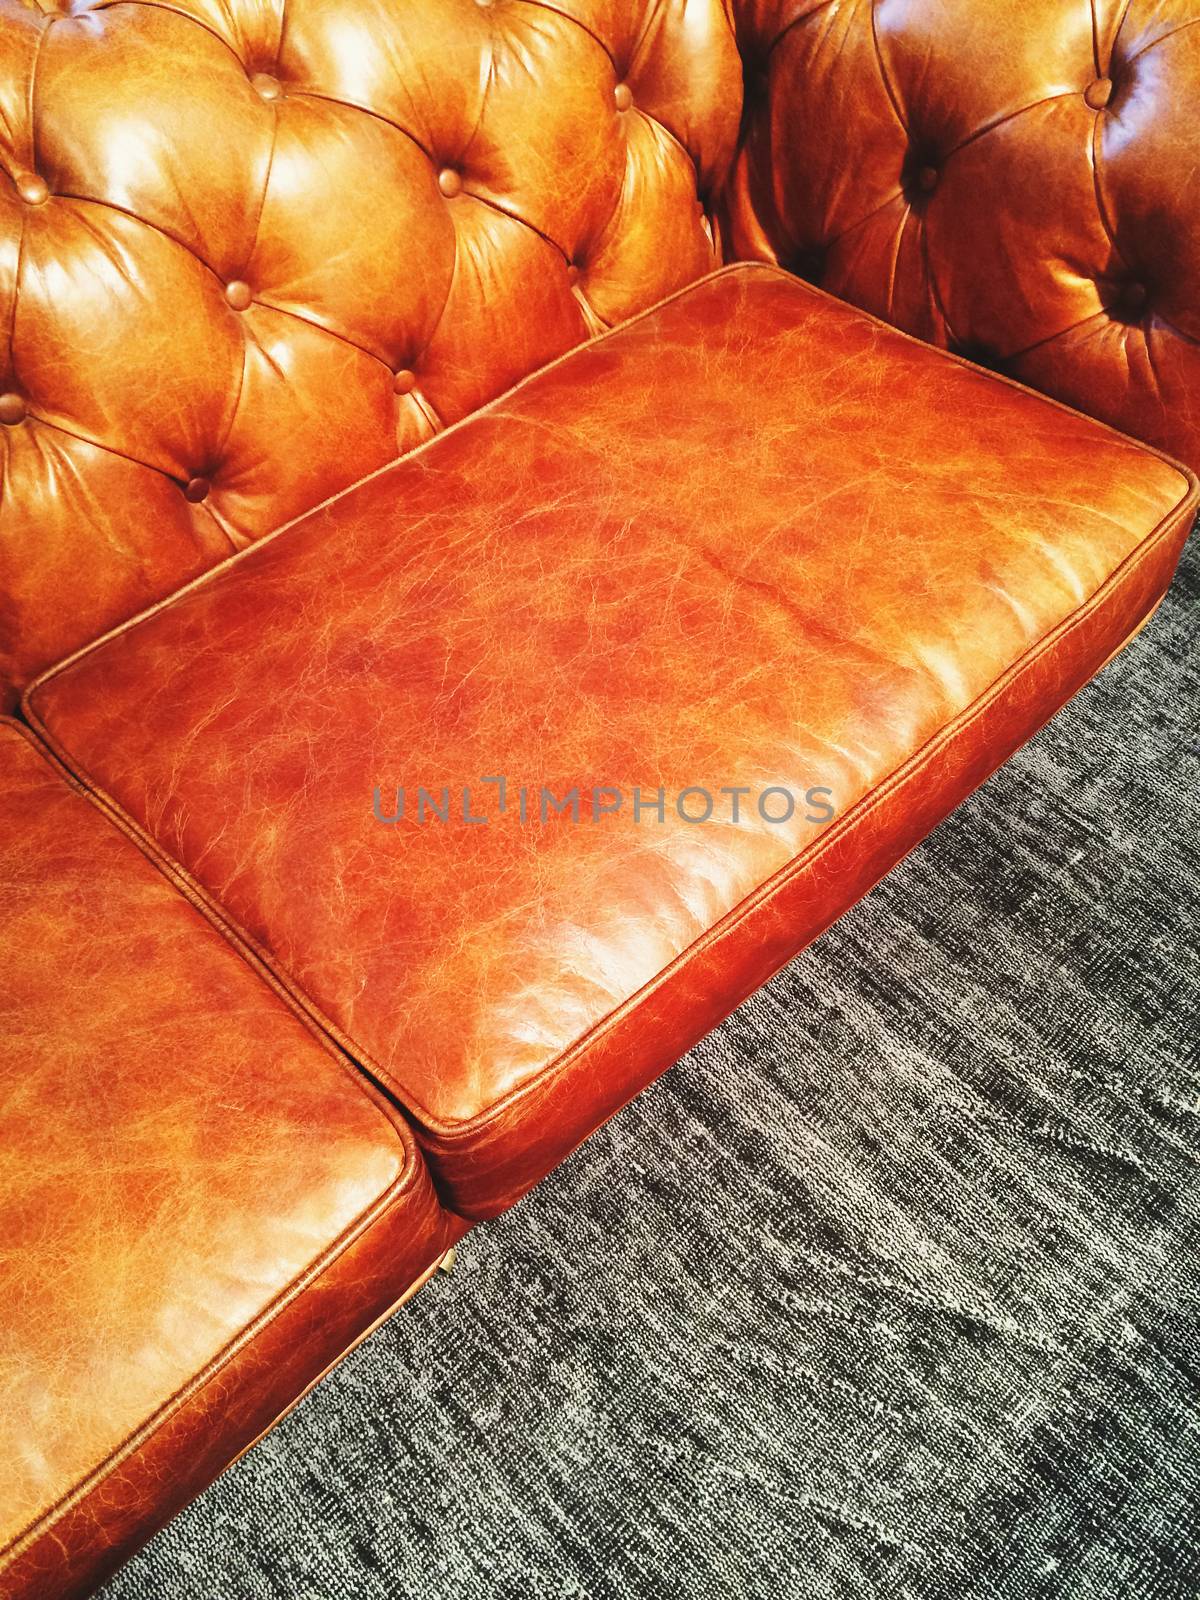 Luxurious leather sofa on gray carpet by anikasalsera